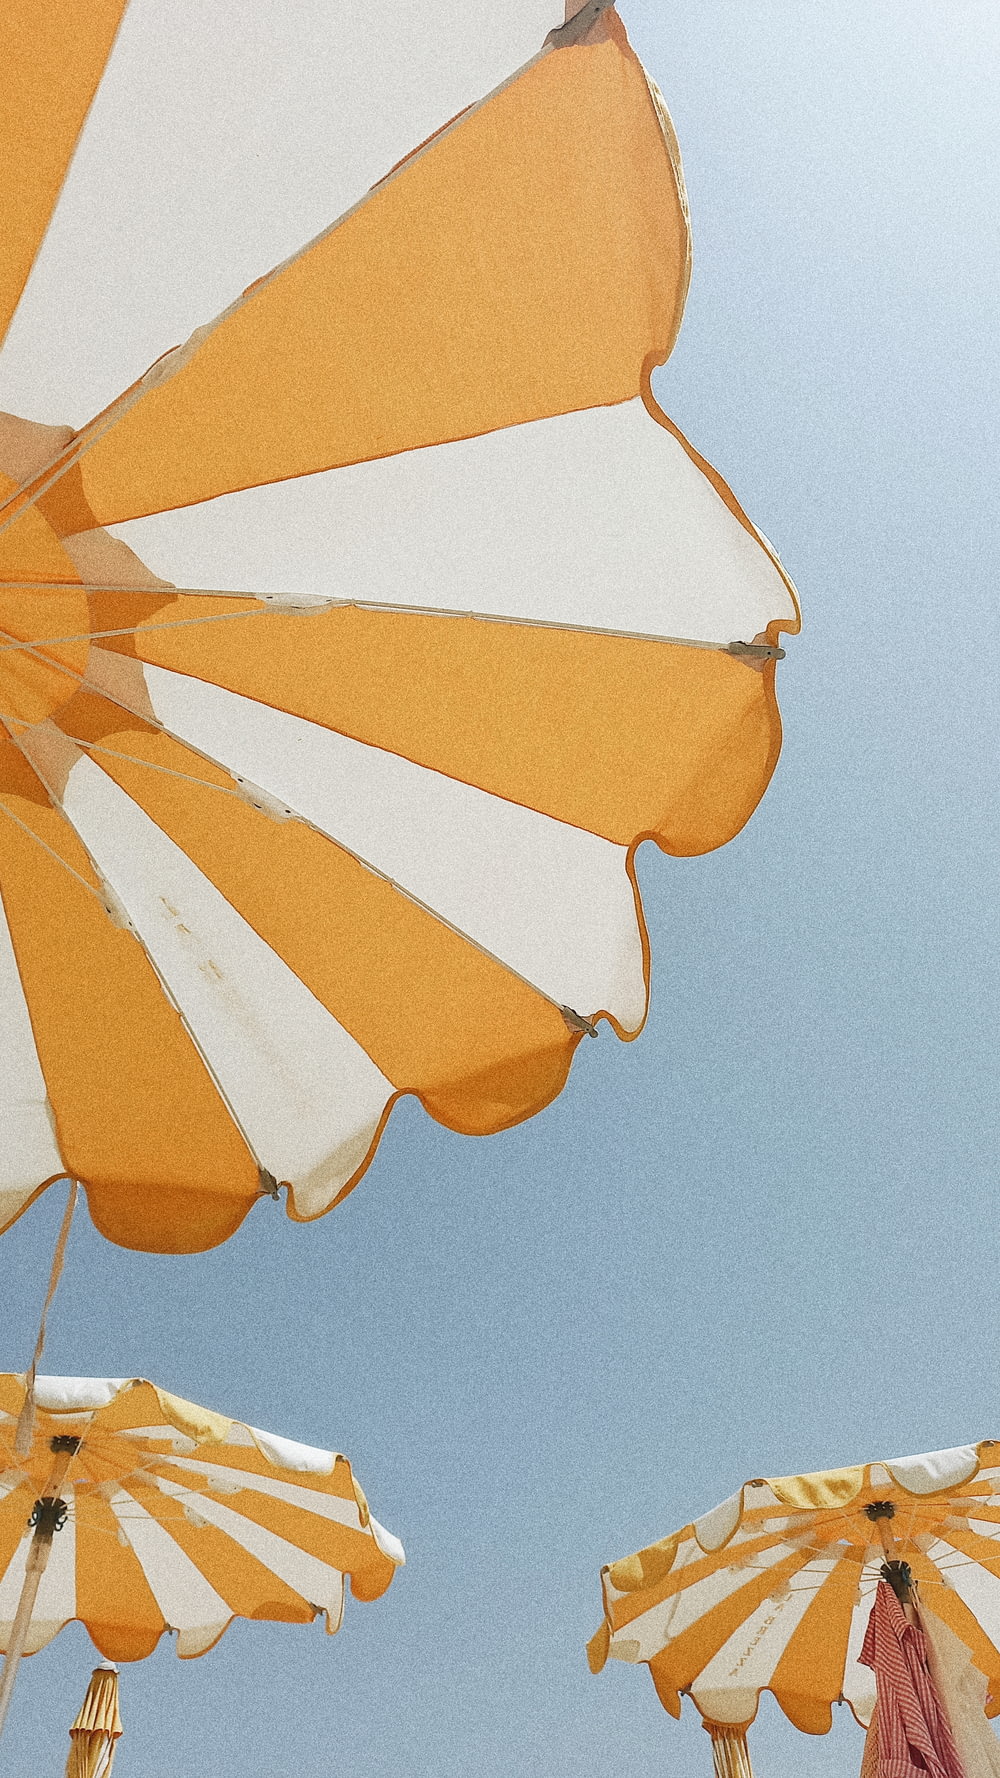 yellow and orange umbrella under blue sky during daytime